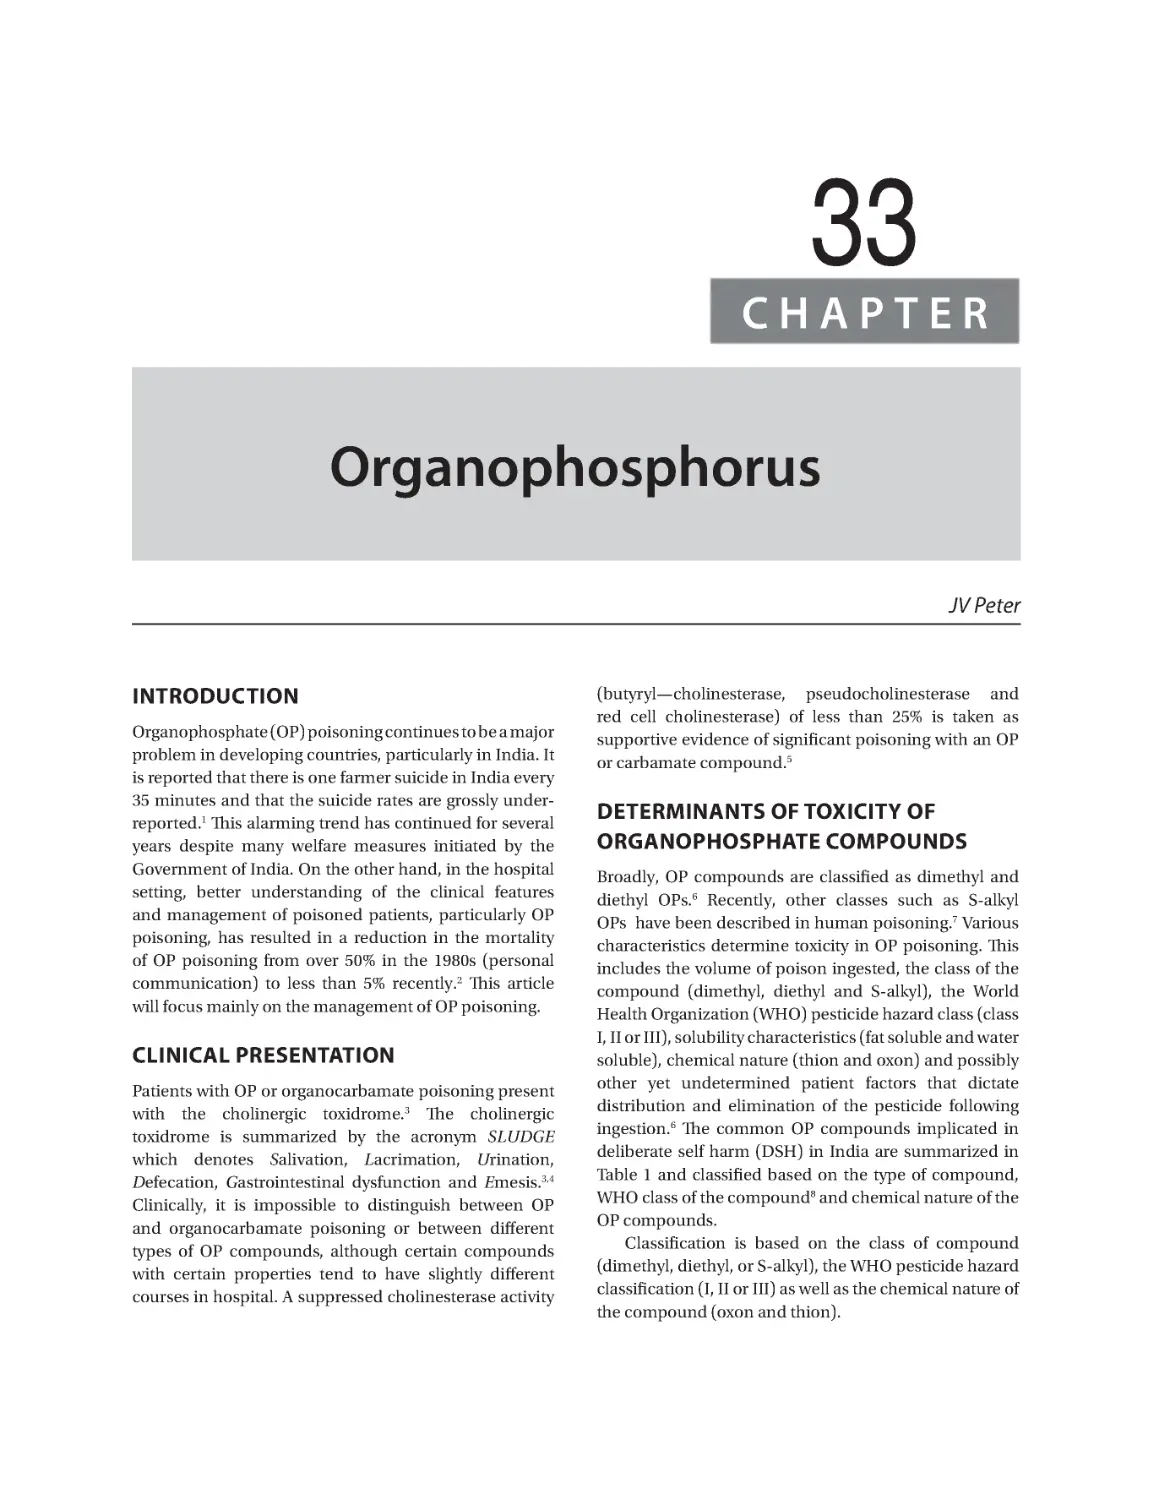 Chapter 33: Organophosphorus